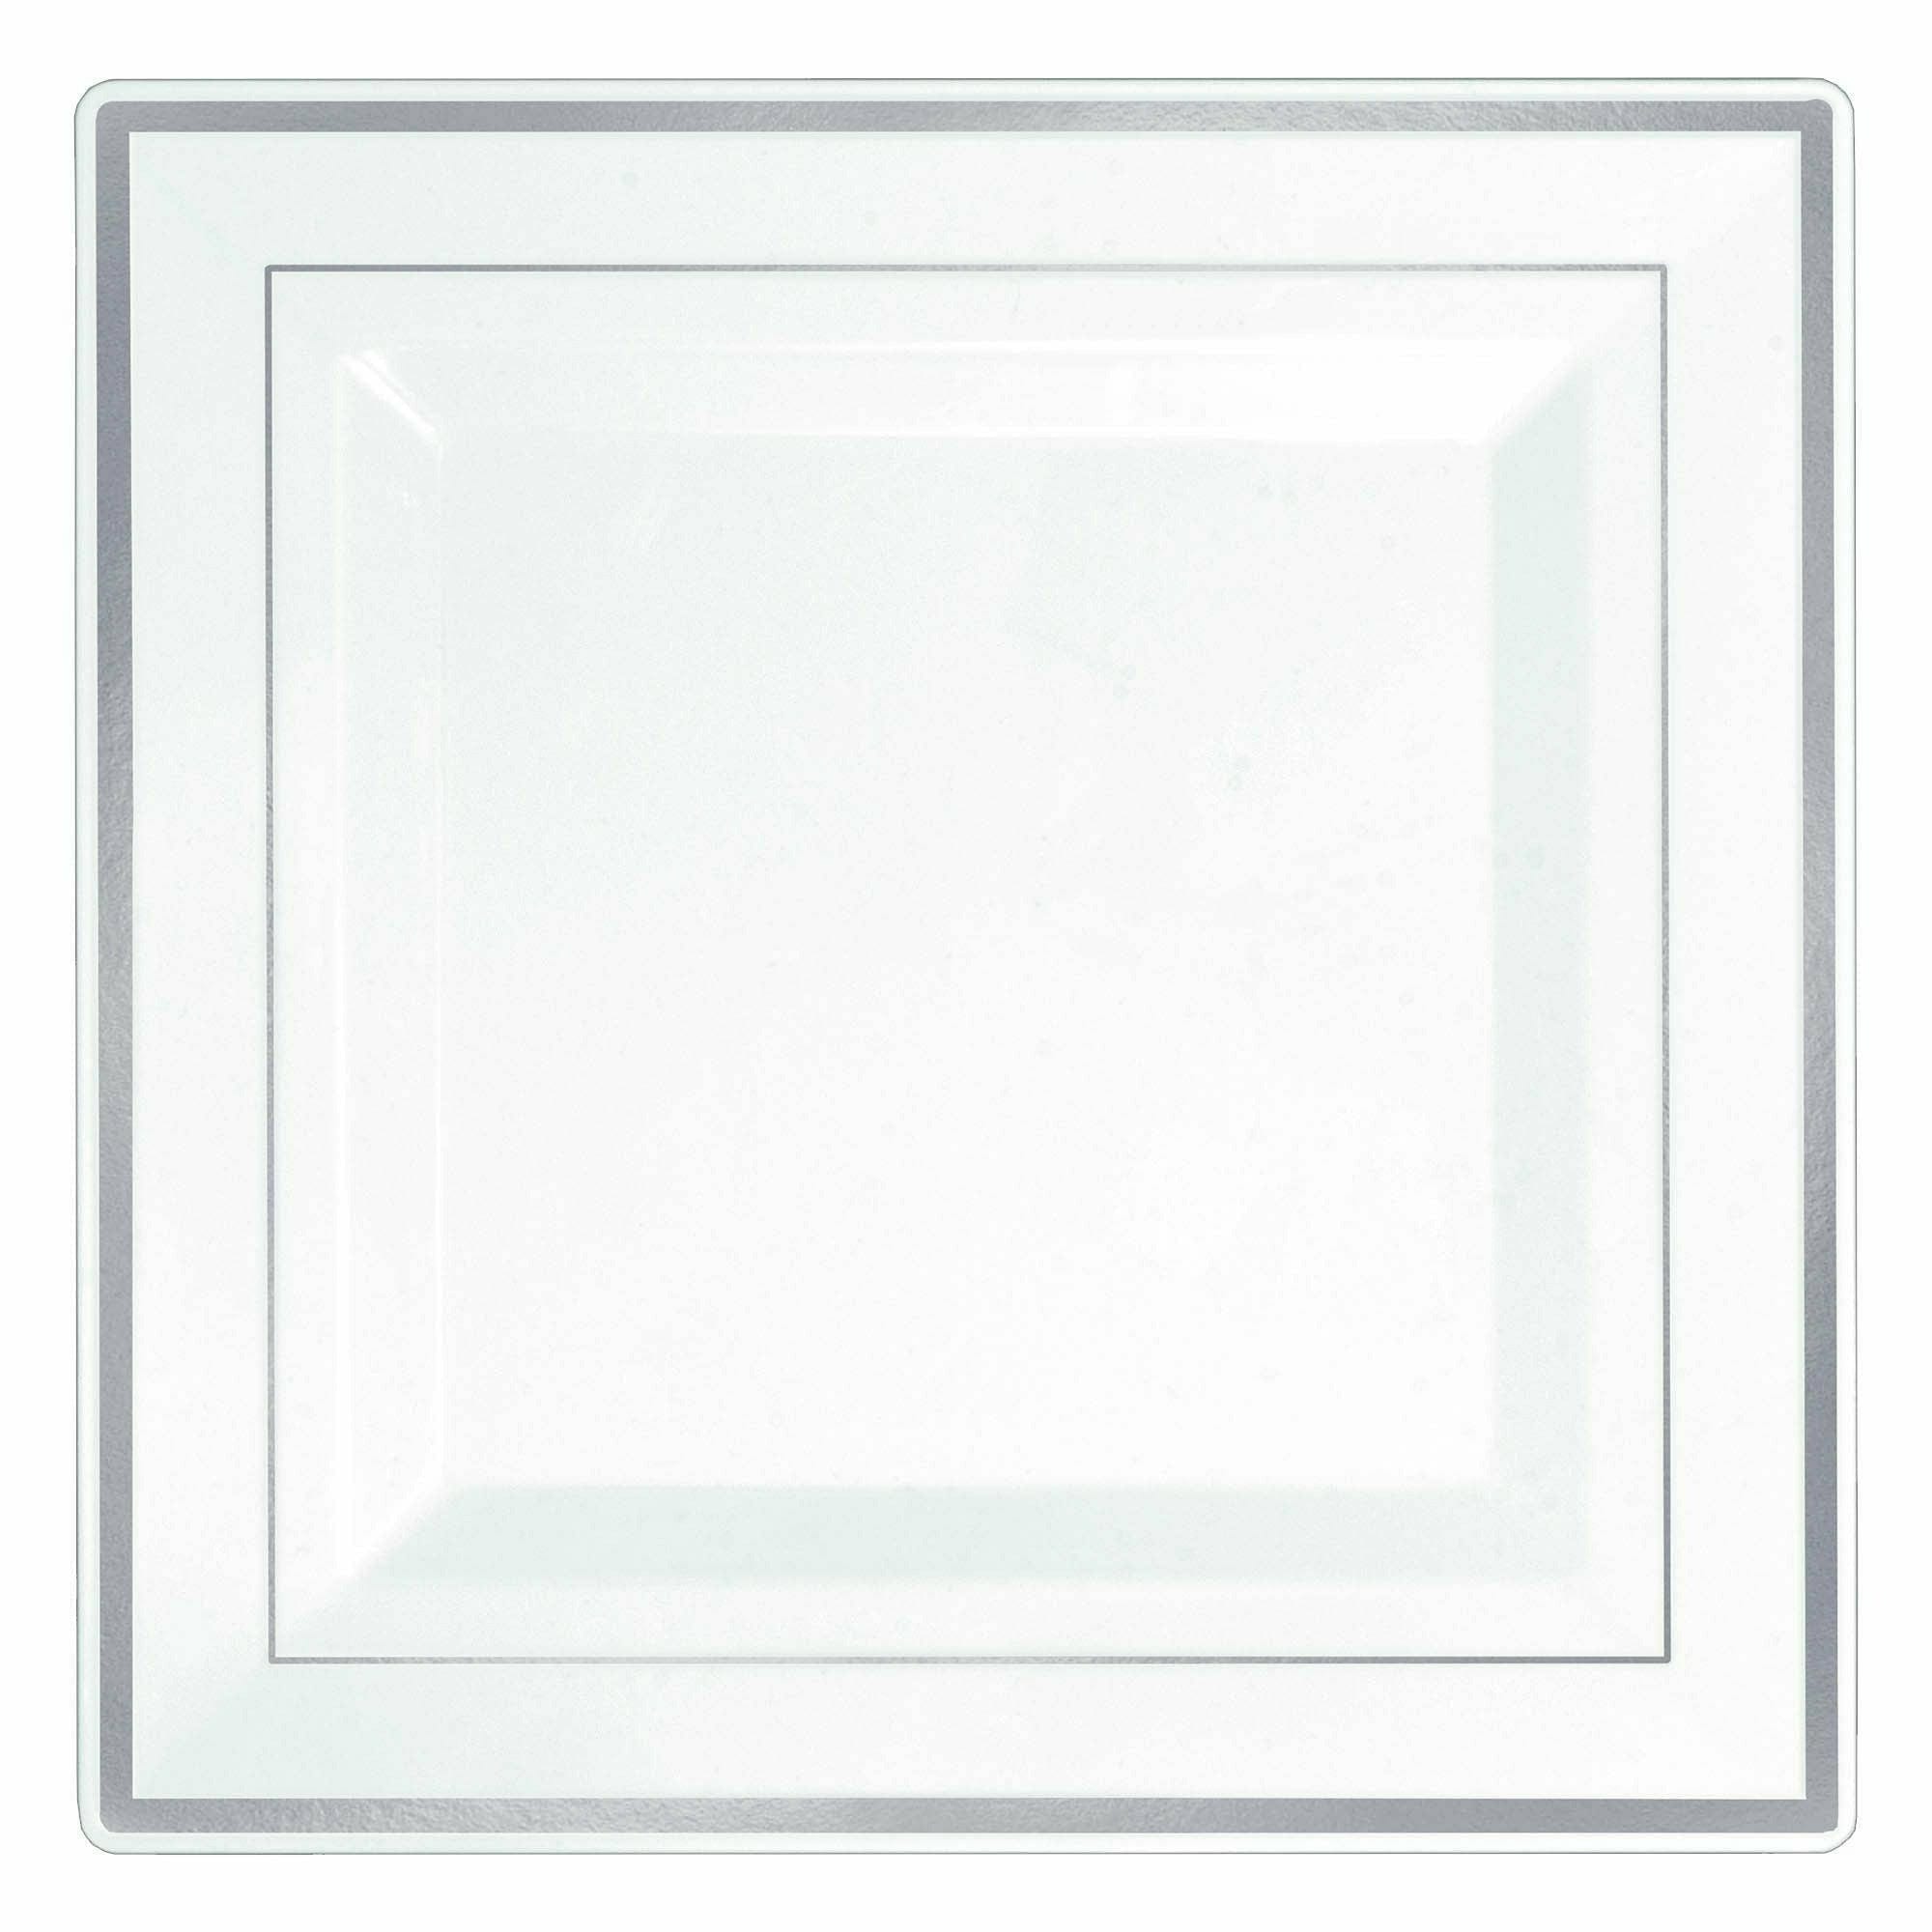 Amscan BASIC Square Plastic Plate White w/Silver Trim, 10"